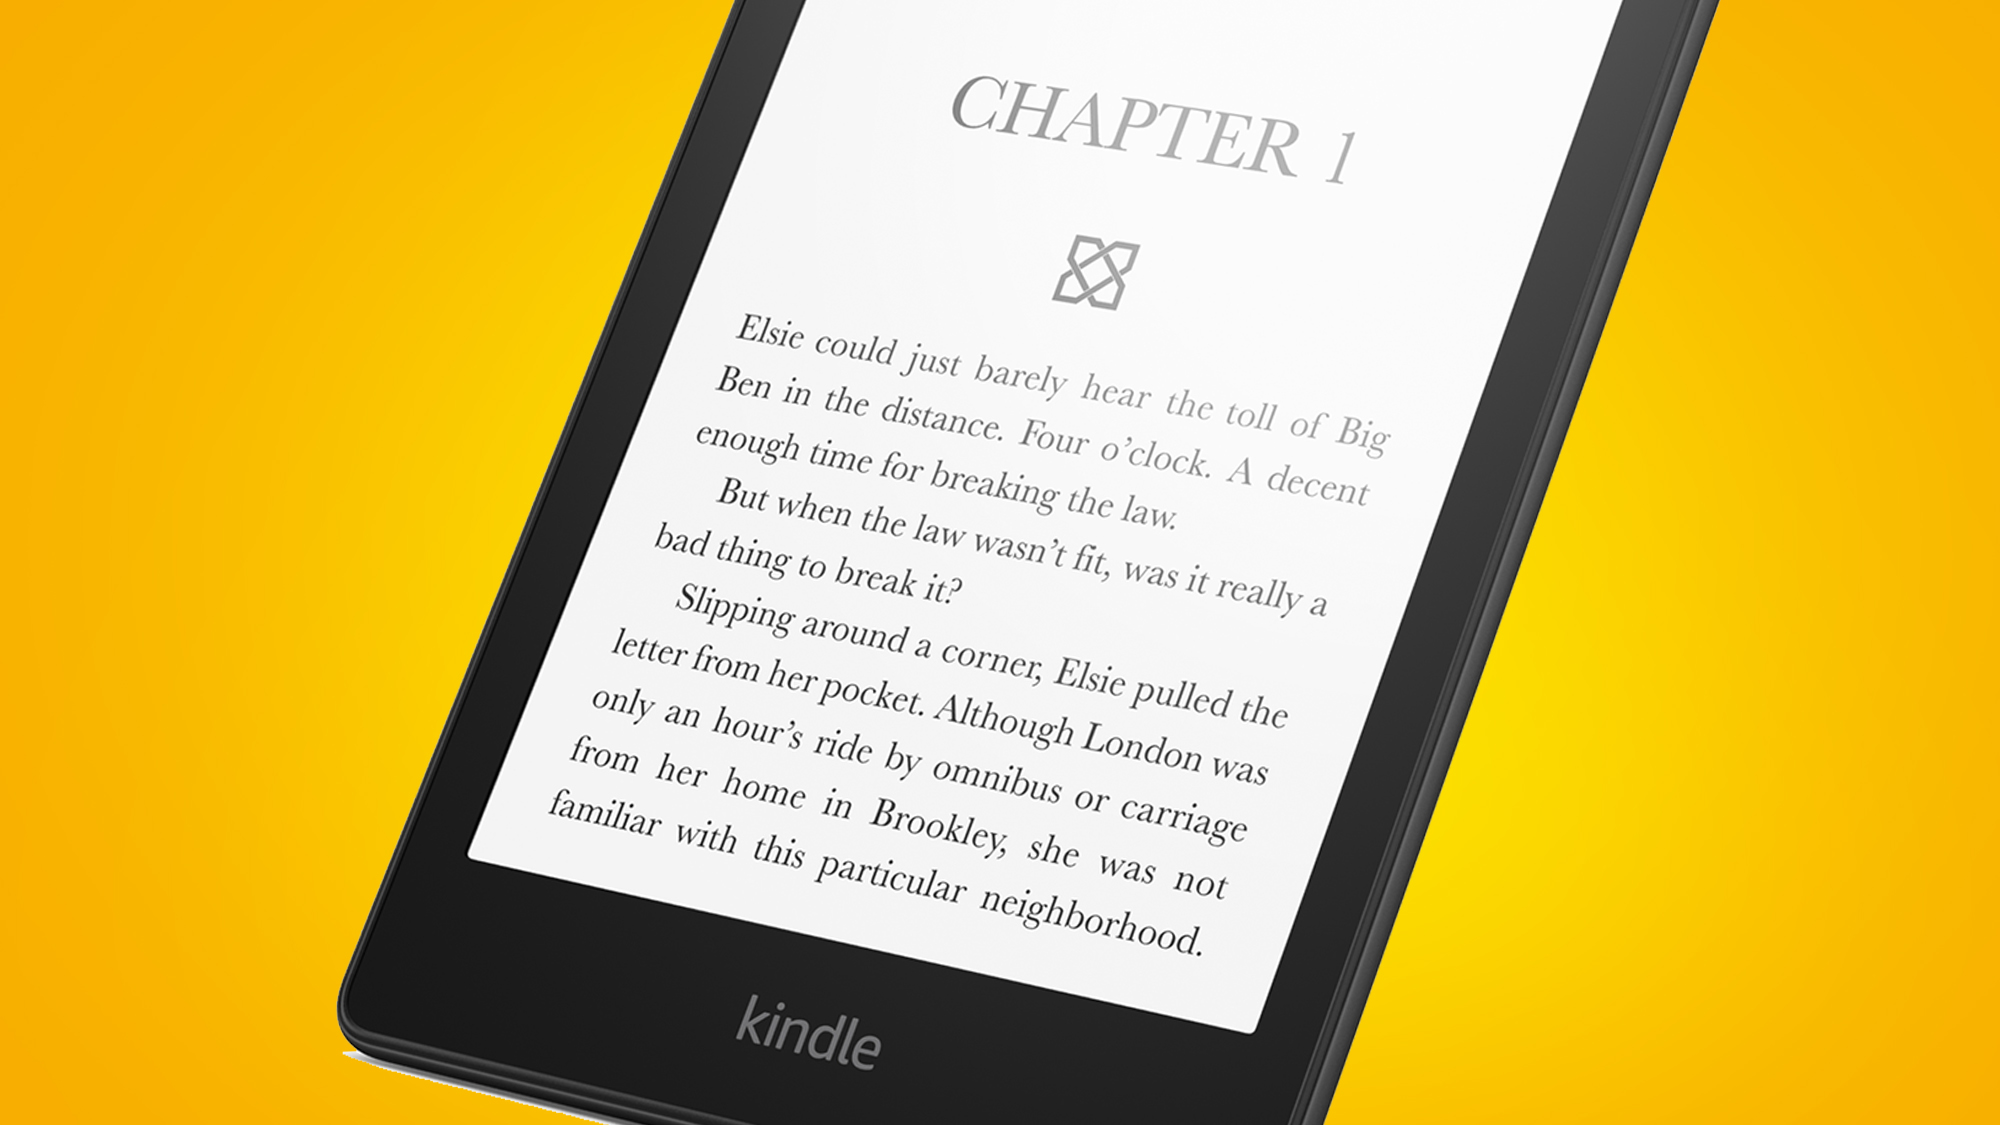 An Amazon Kindle Paperwhite ereader on an orange background